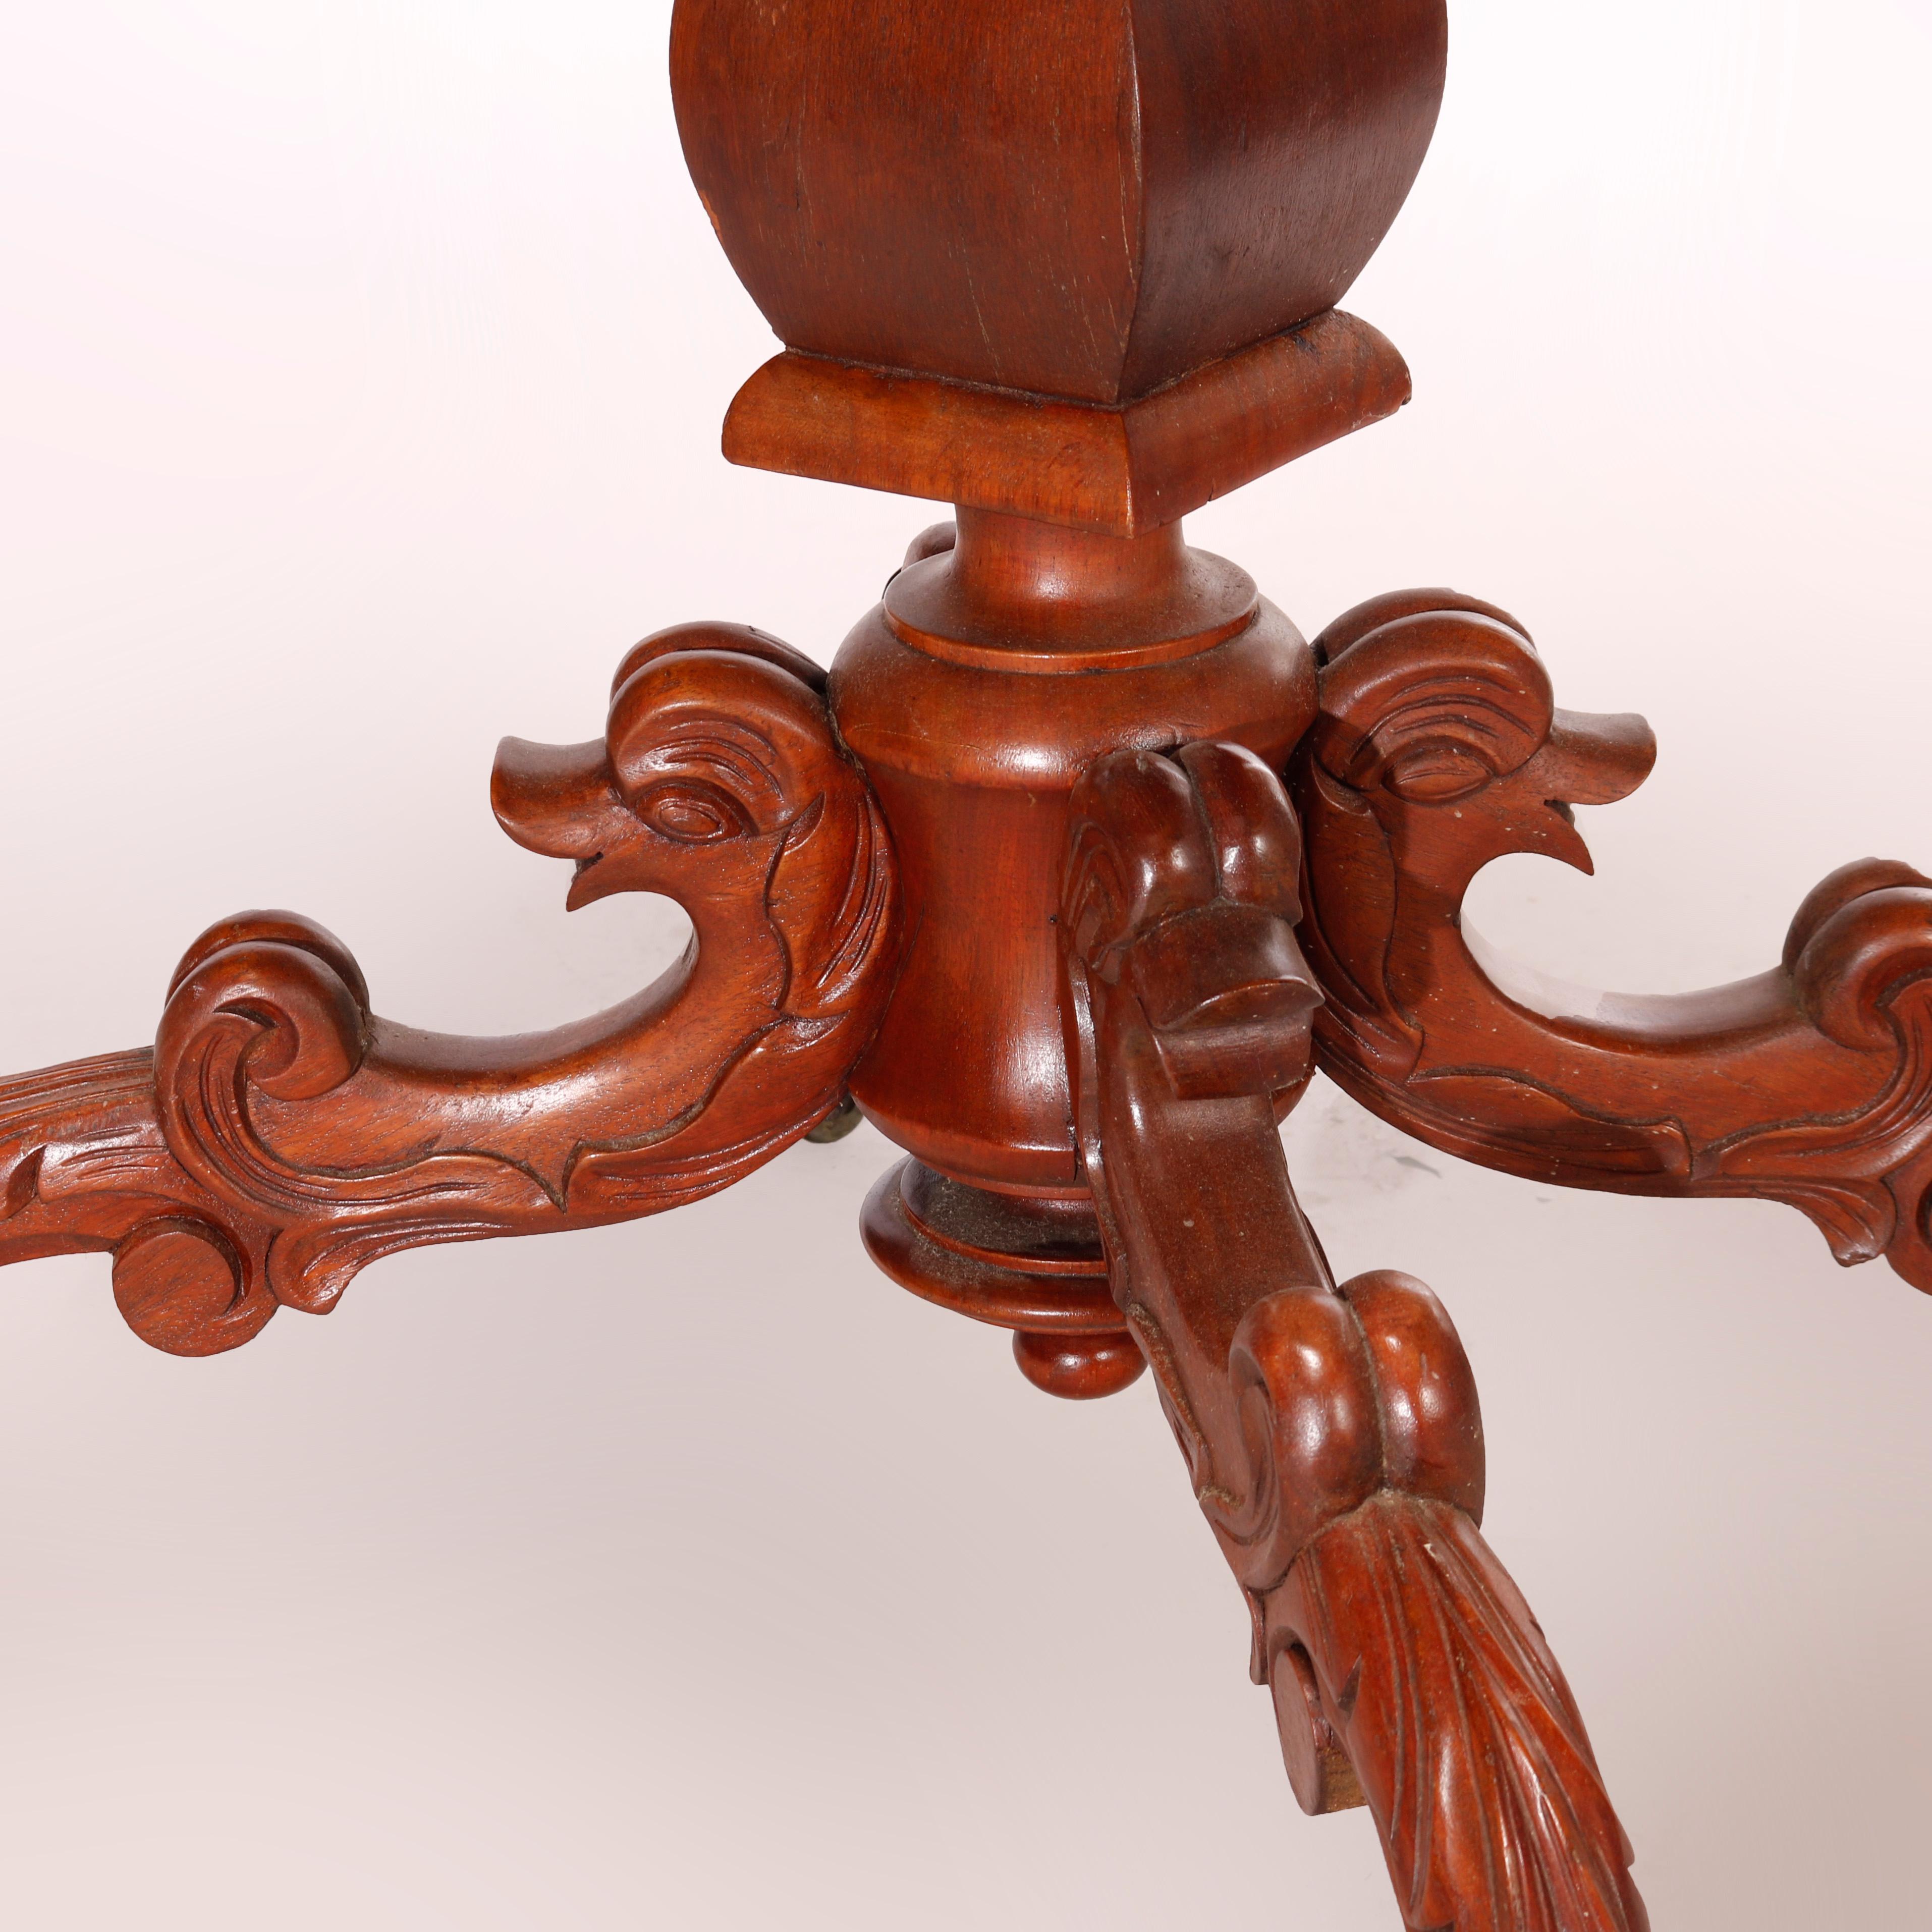 Antique Renaissance Revival Figural Carved Oval Marble Top Parlor Table, c1880 For Sale 7